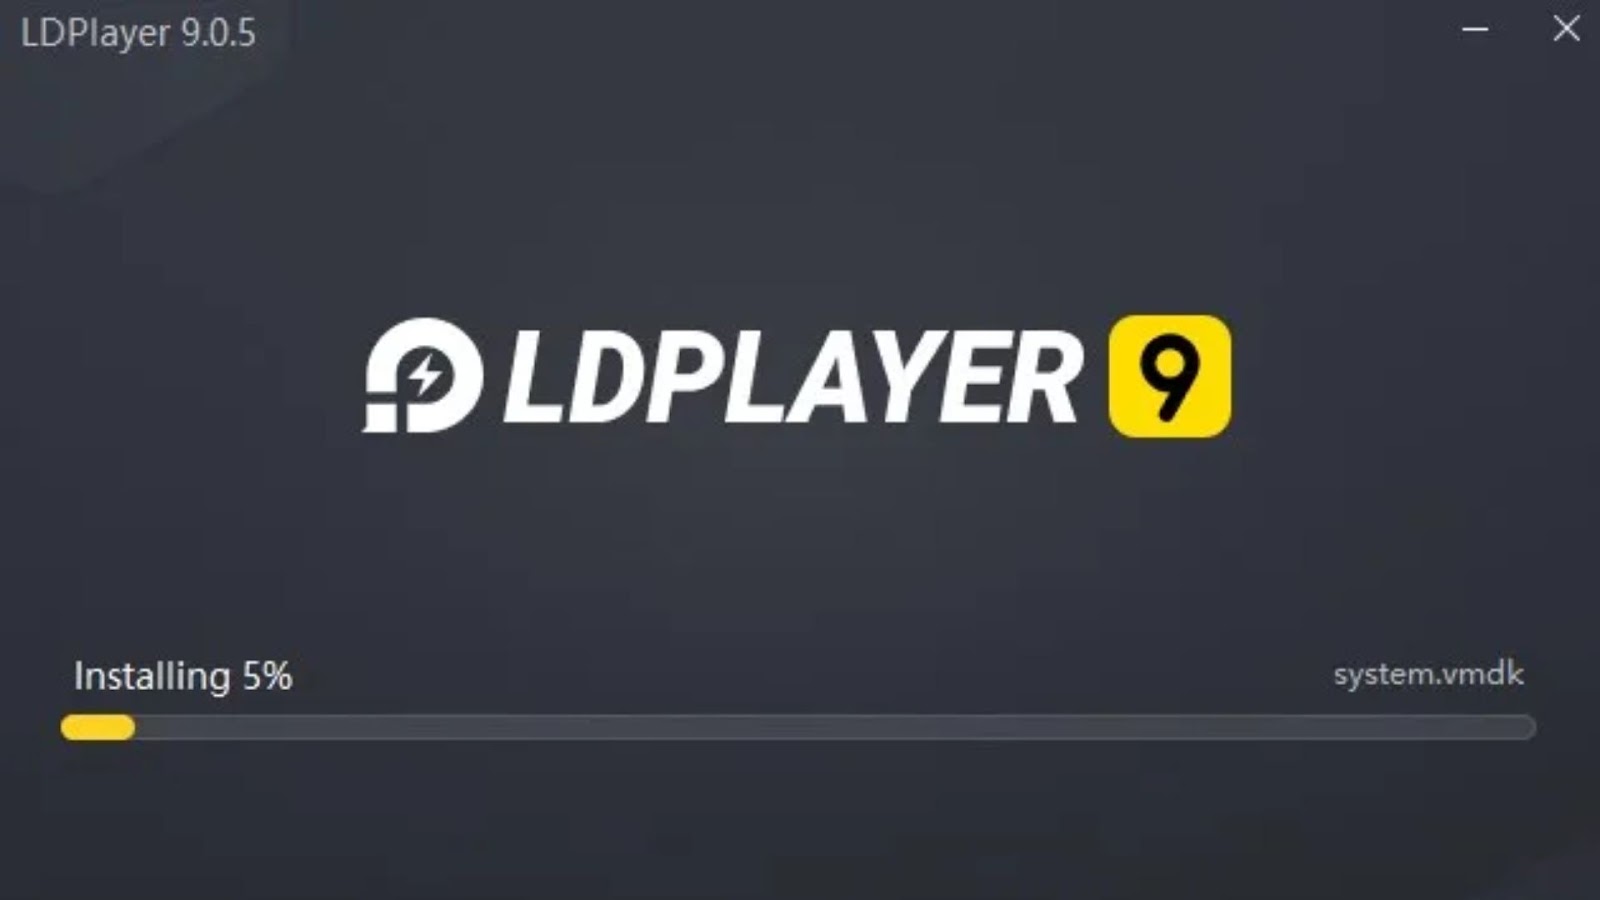 LDPlayer 9